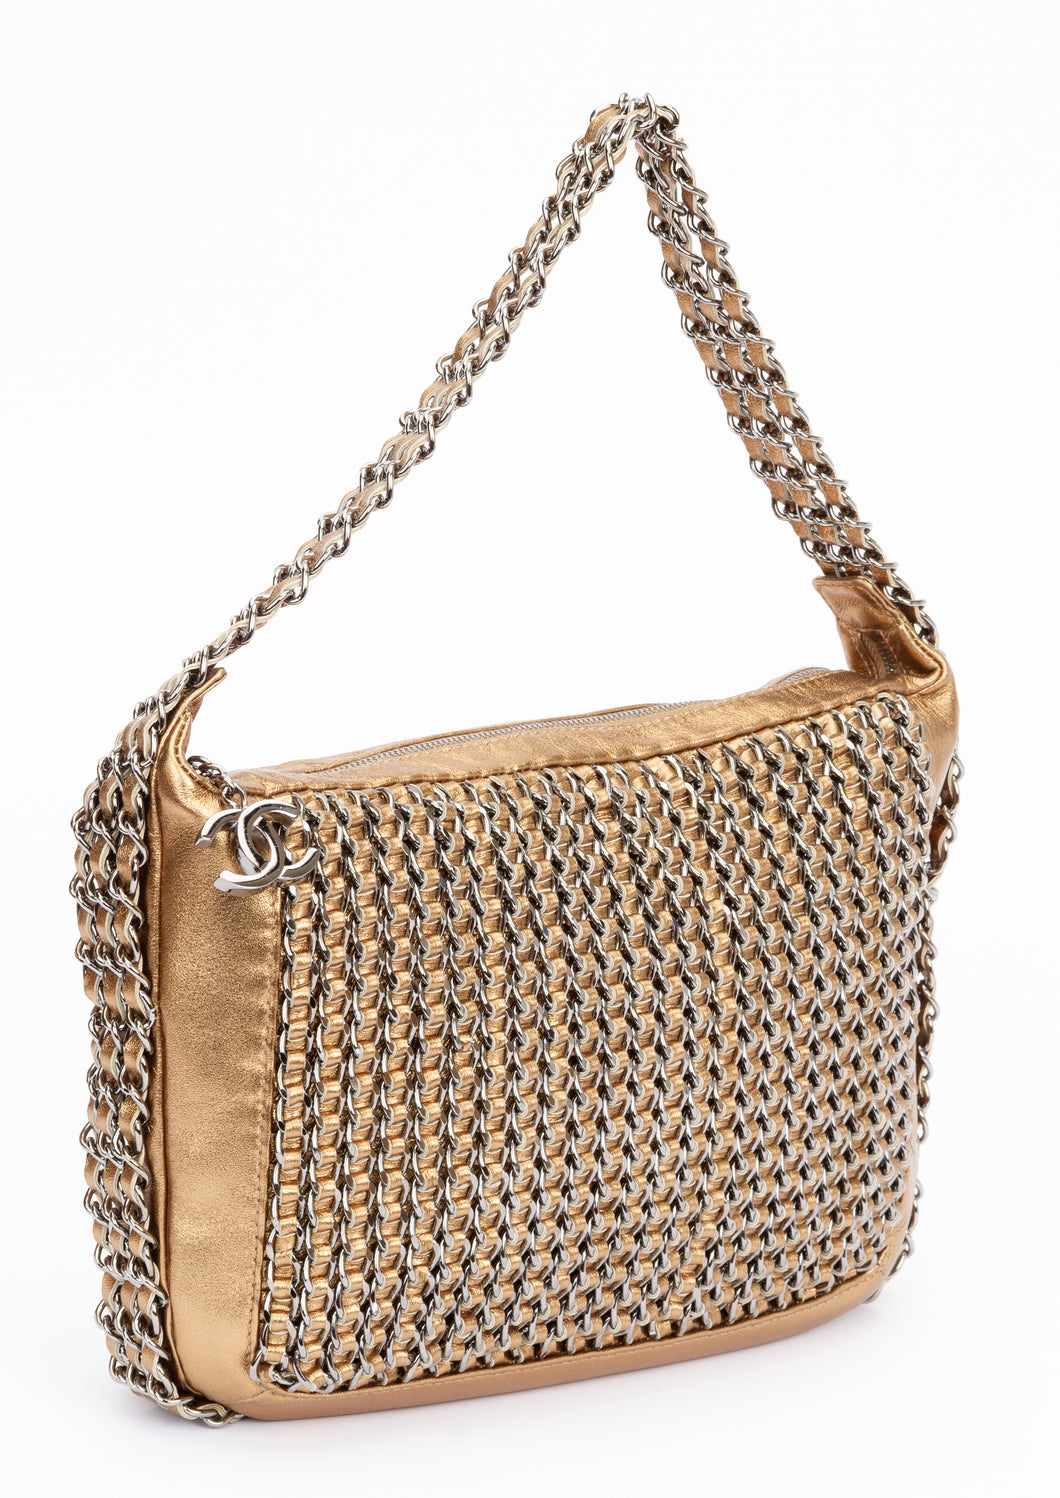 Chanel multi-chain handbag